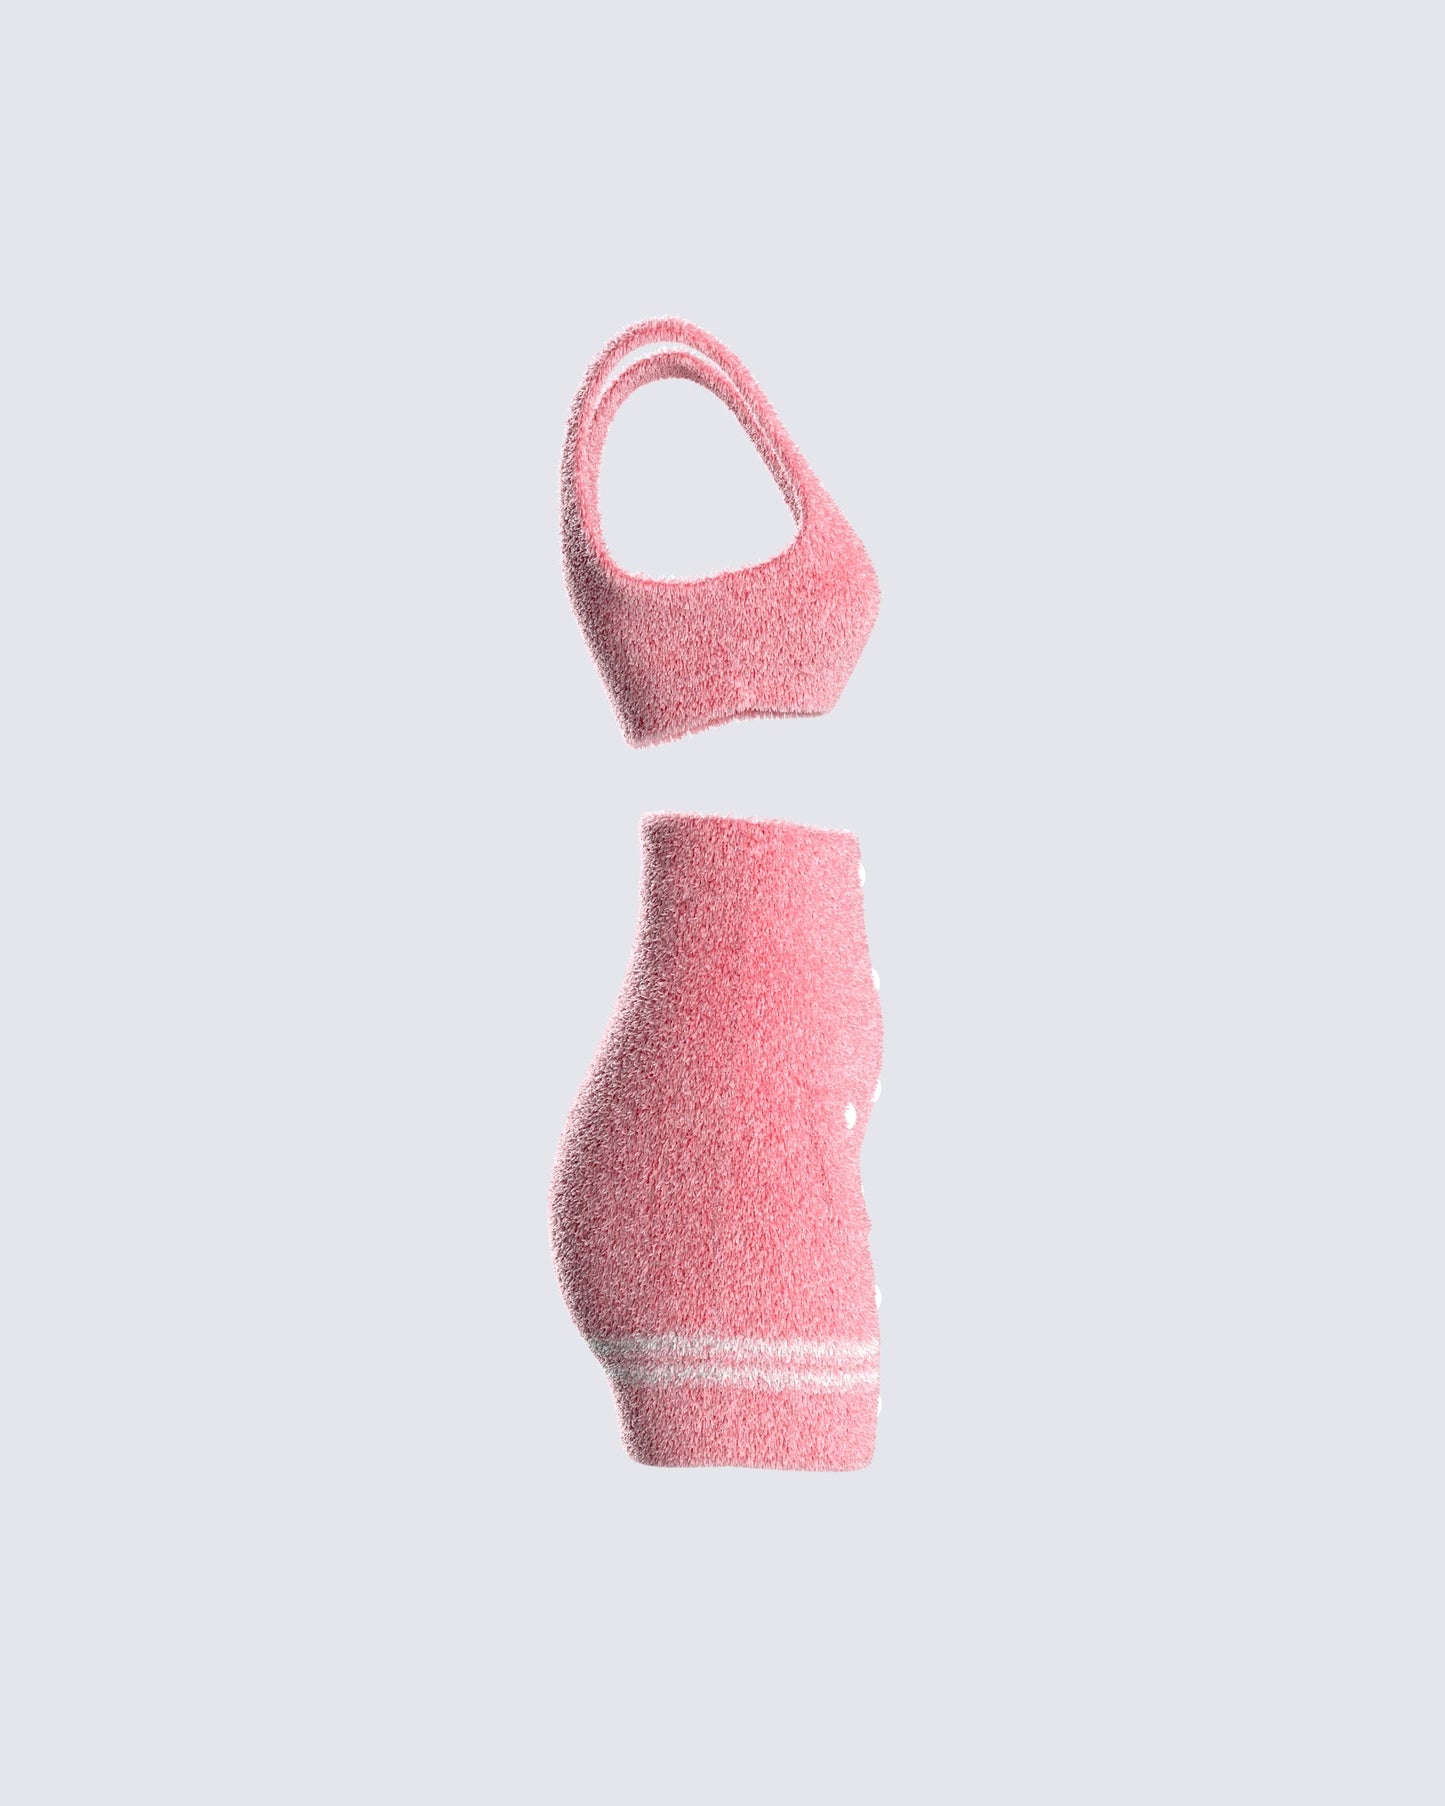 Joss Pink Sweater Set